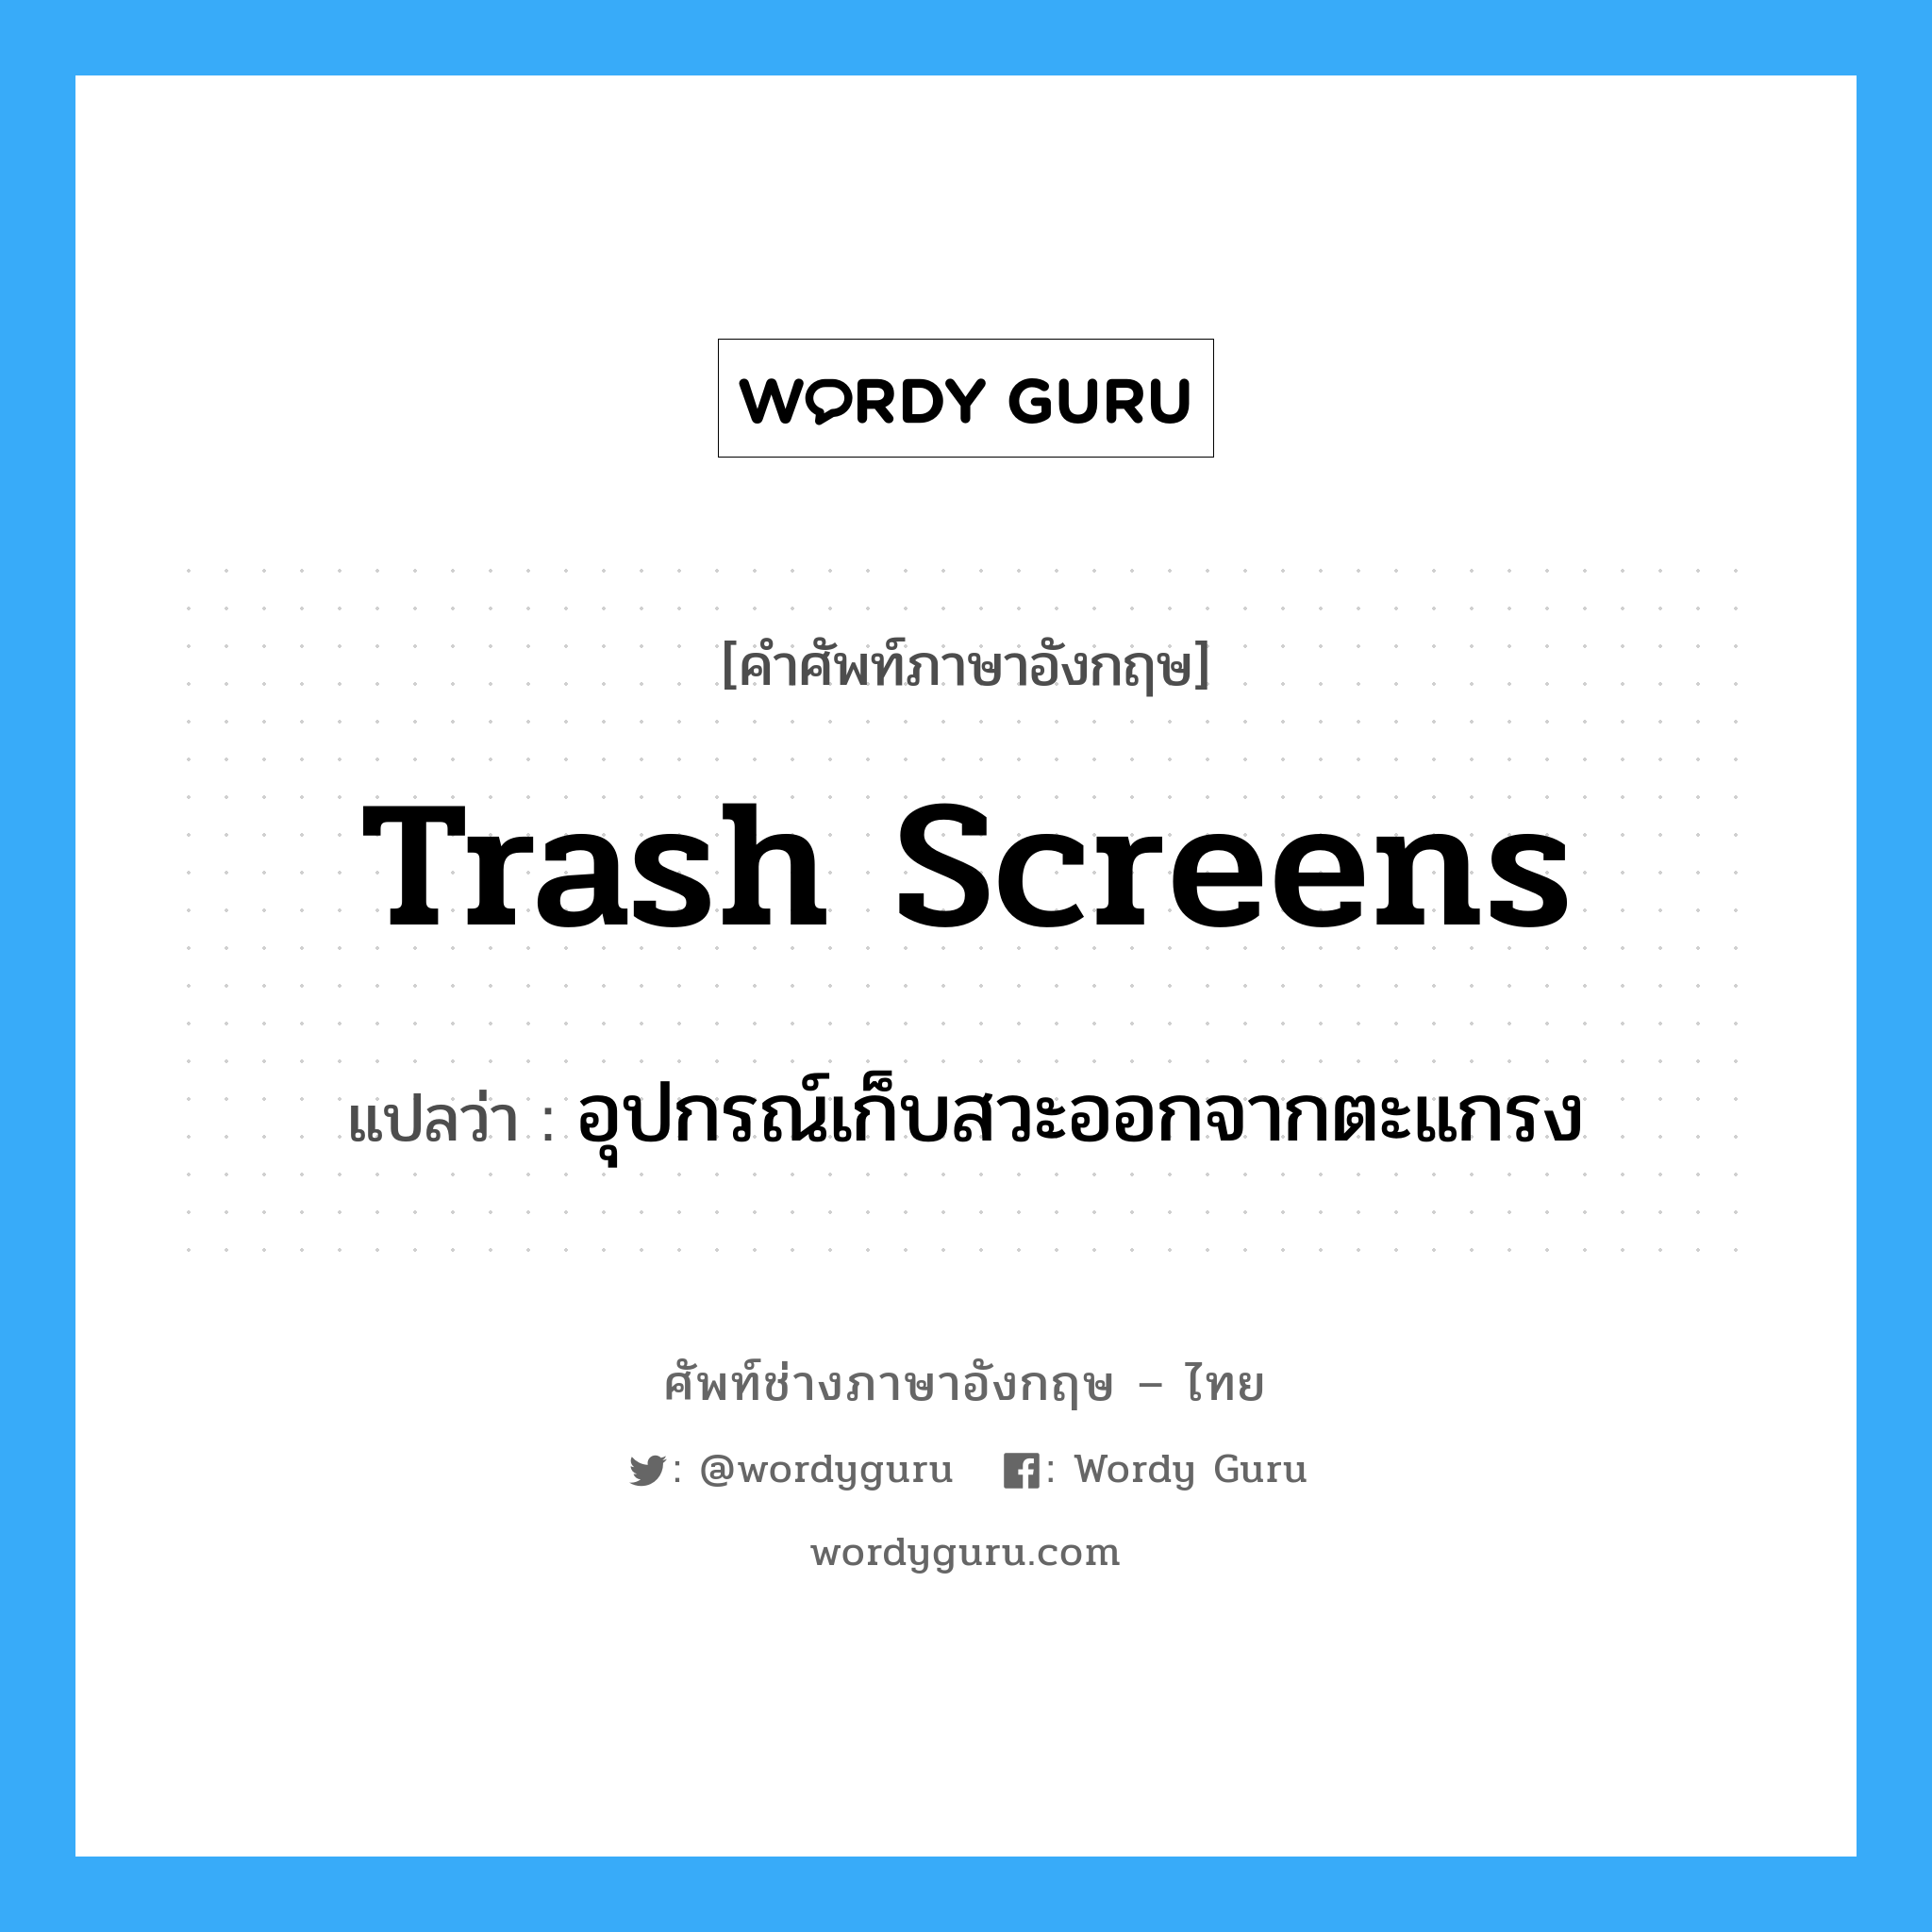 trash screens แปลว่า?, คำศัพท์ช่างภาษาอังกฤษ - ไทย trash screens คำศัพท์ภาษาอังกฤษ trash screens แปลว่า อุปกรณ์เก็บสวะออกจากตะแกรง